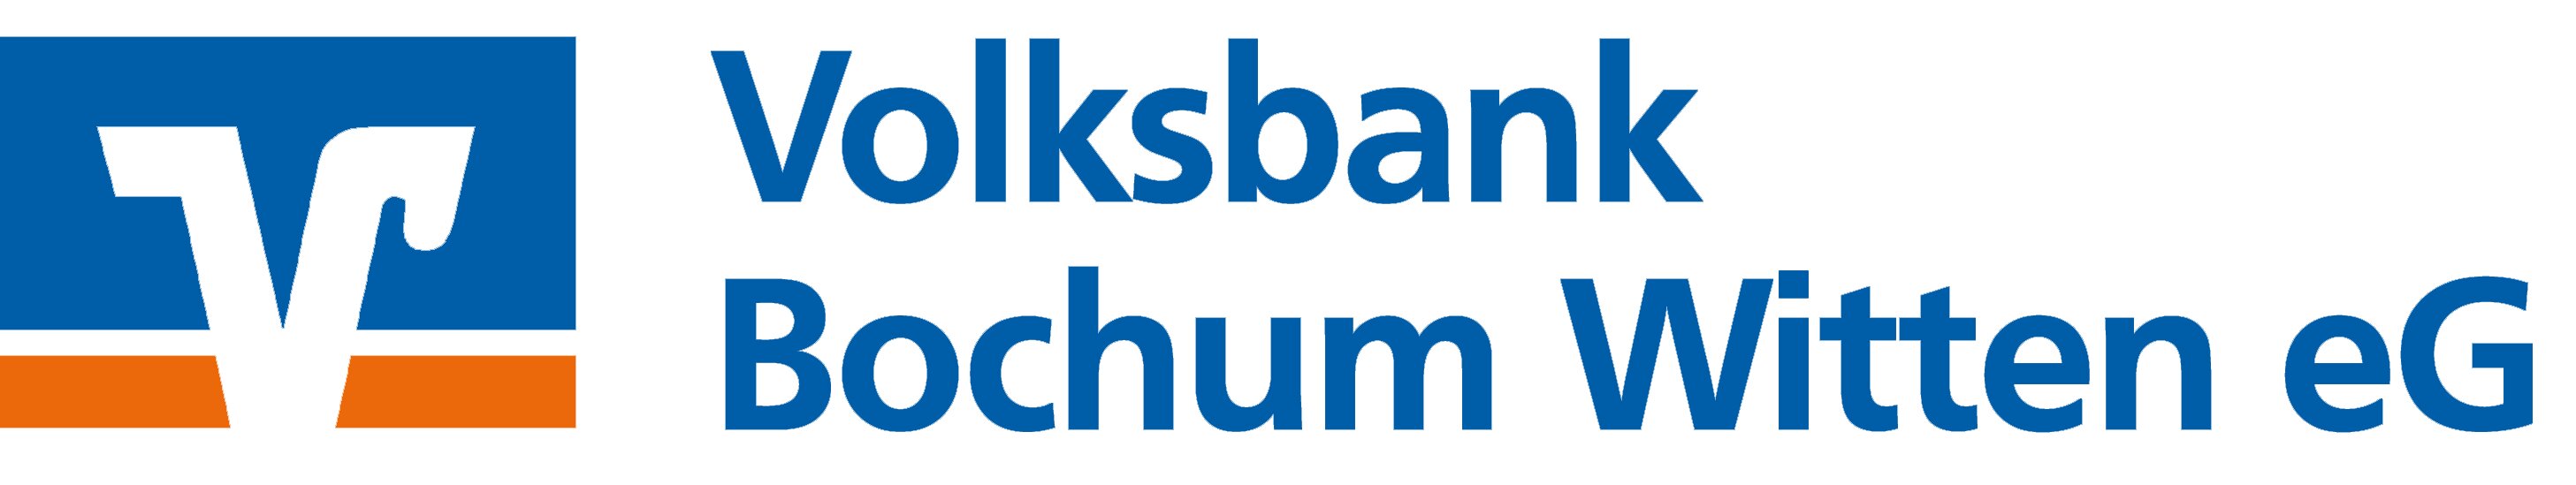 Logo Volksbank Bochum Witten eG.tif